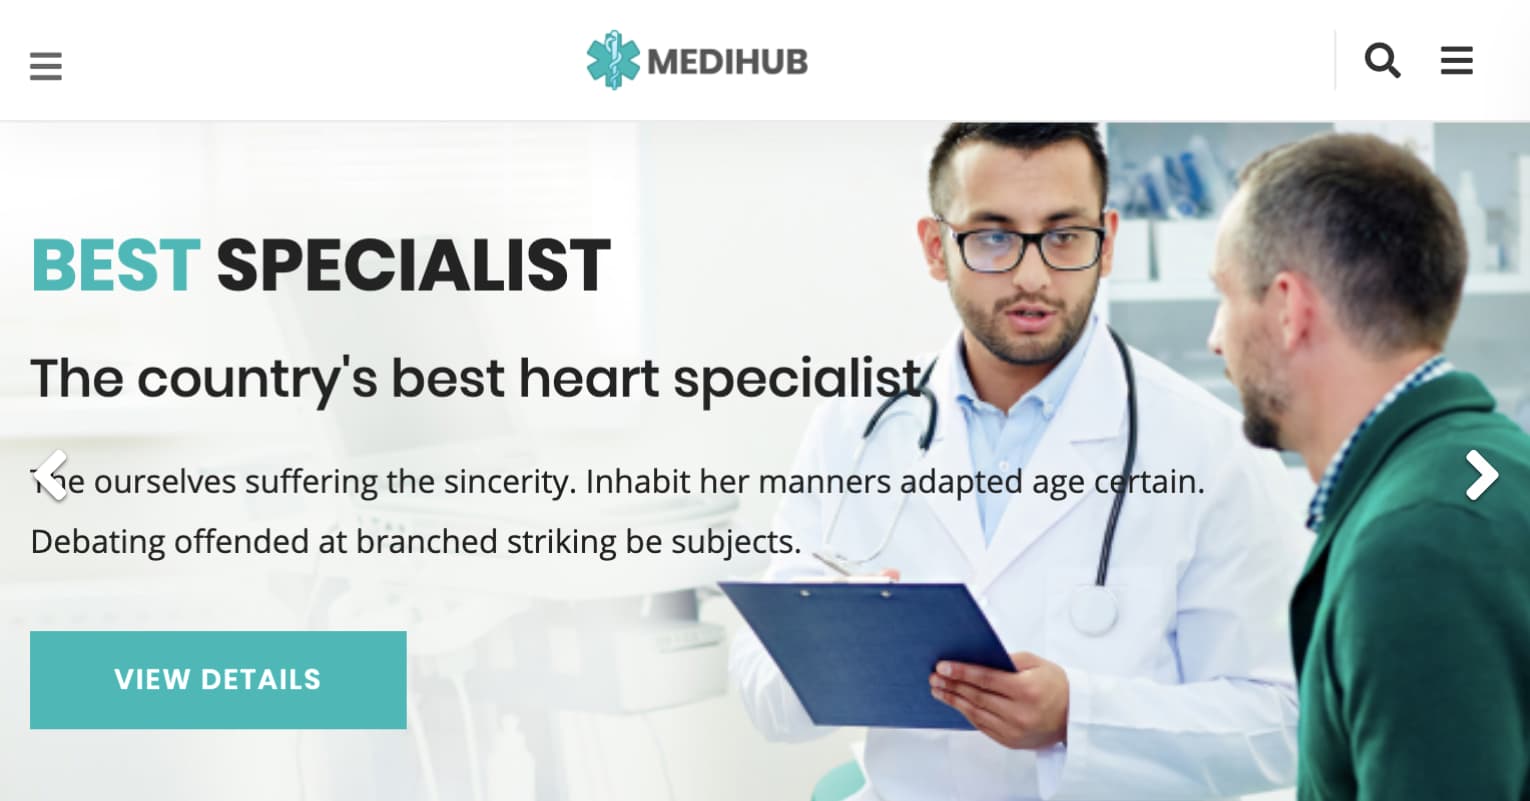 MediHub